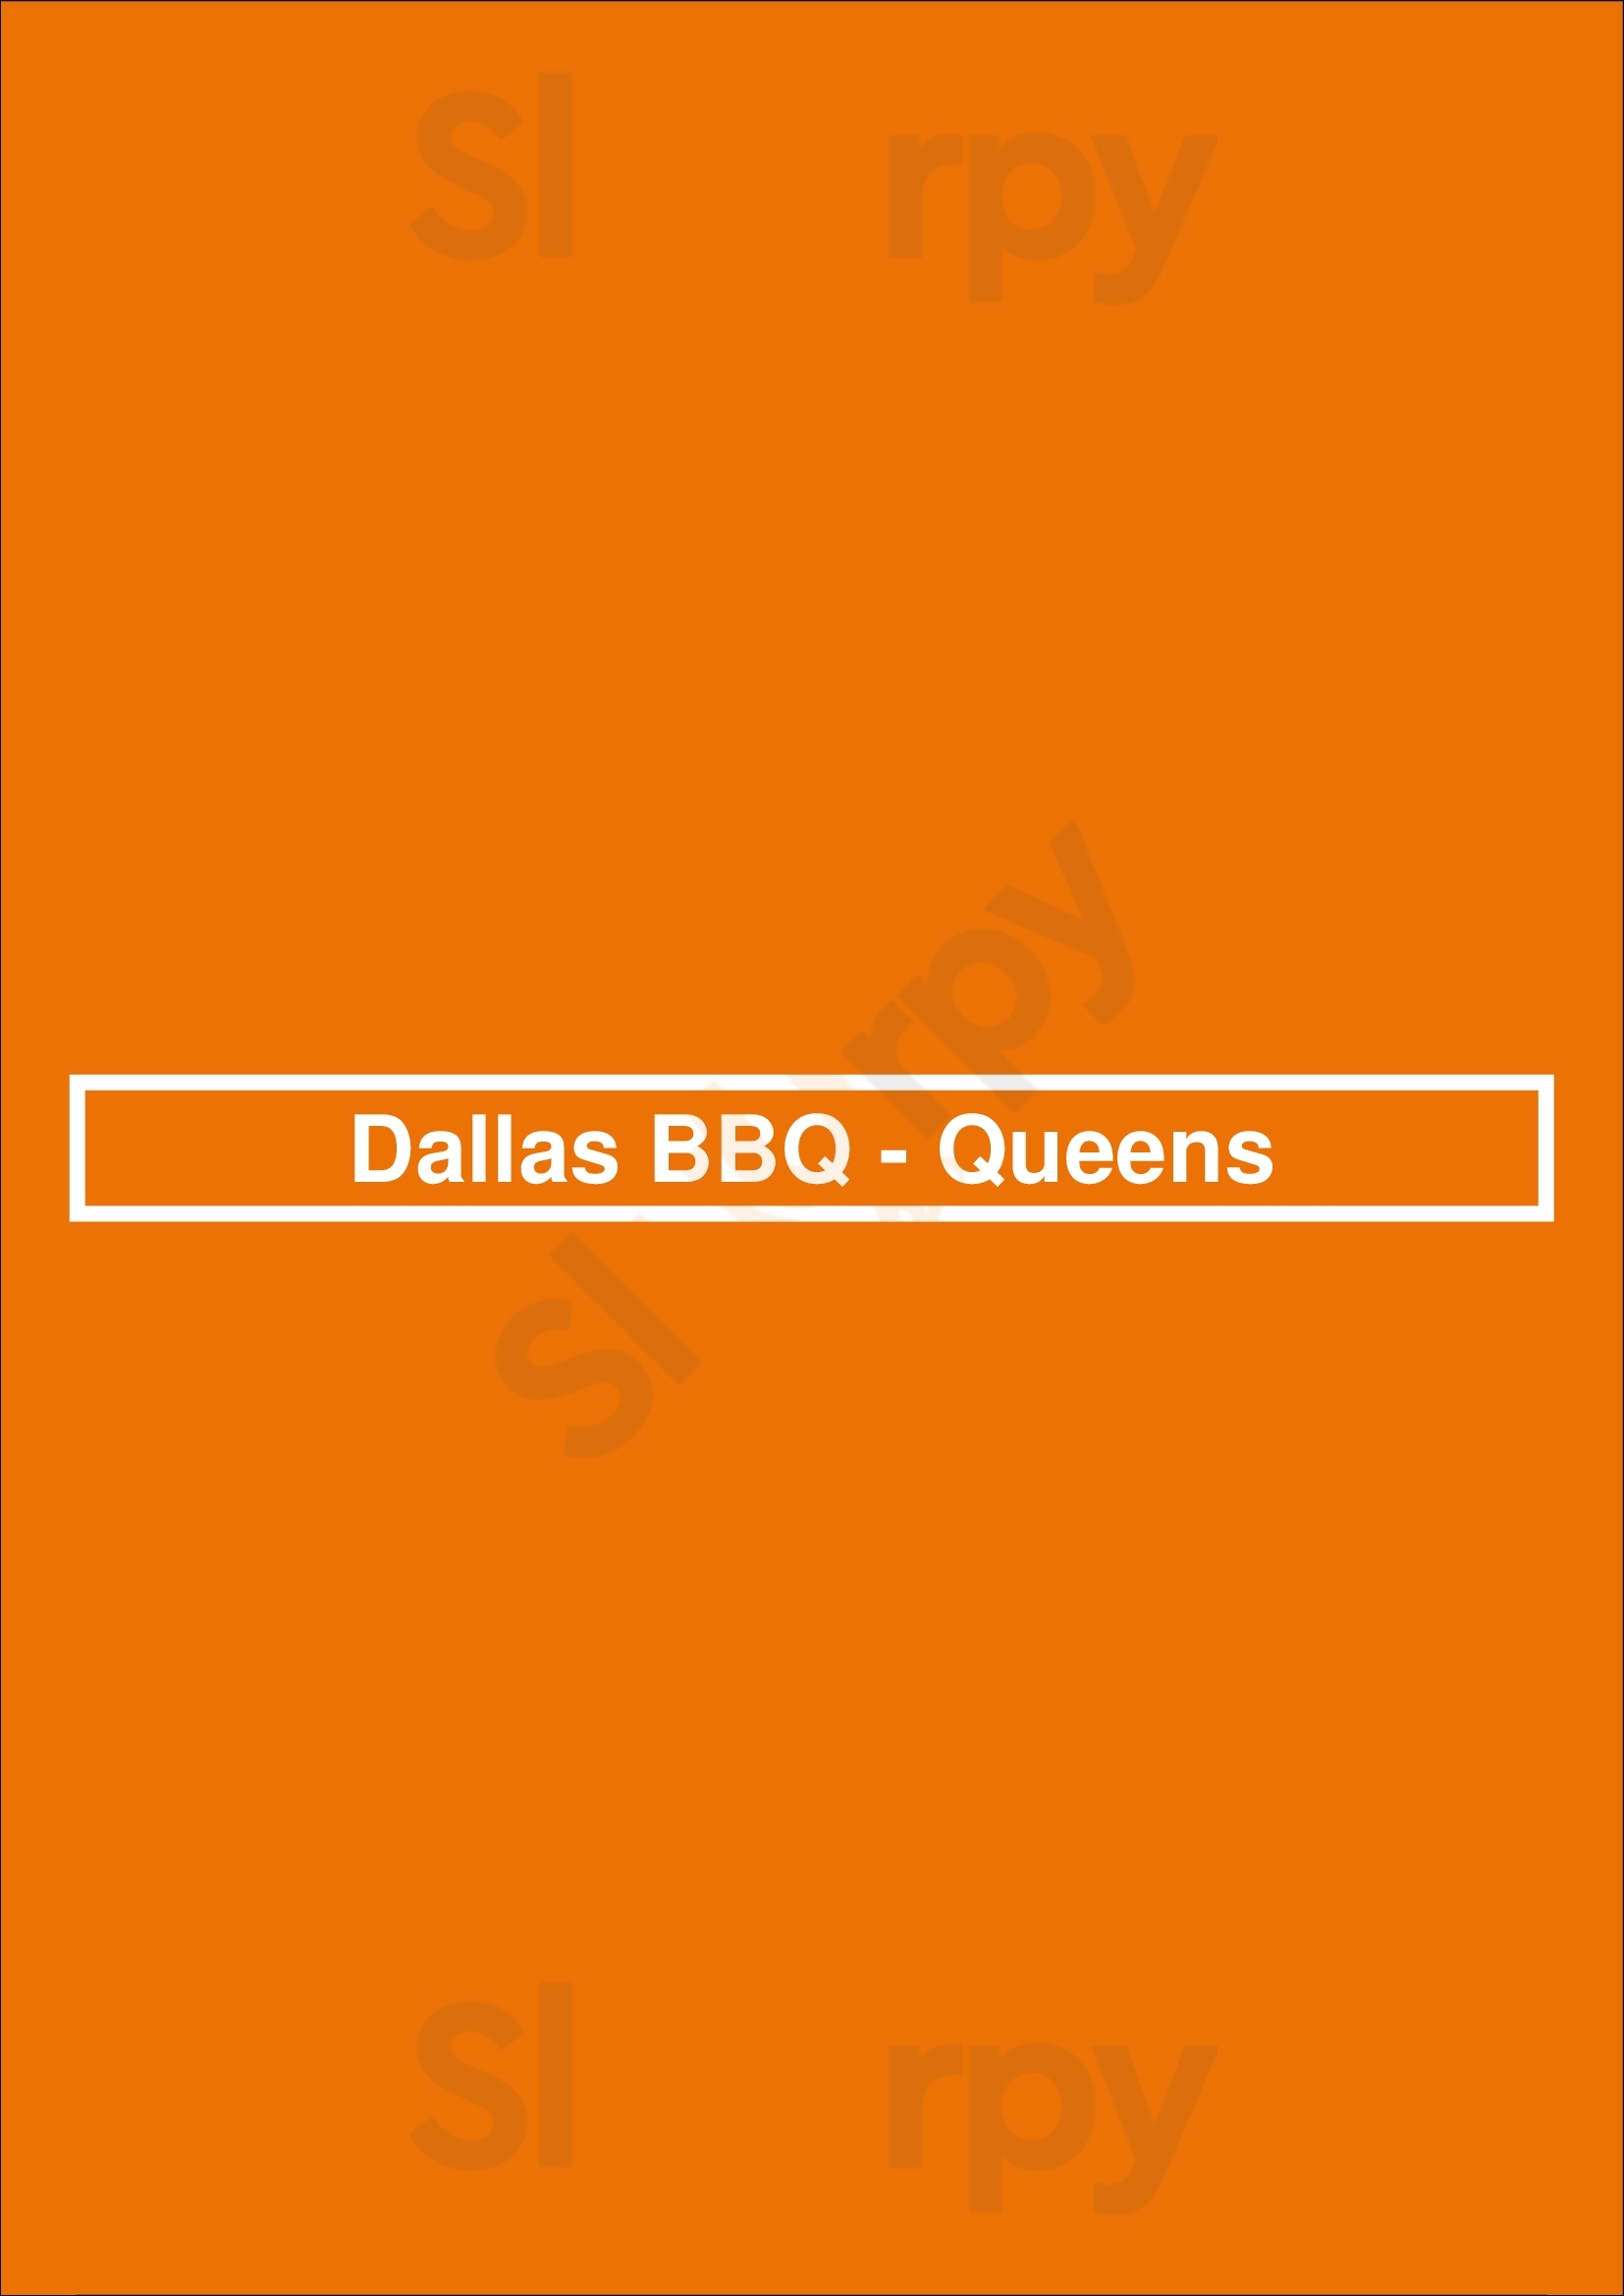 Dallas Bbq - Queens New York City Menu - 1